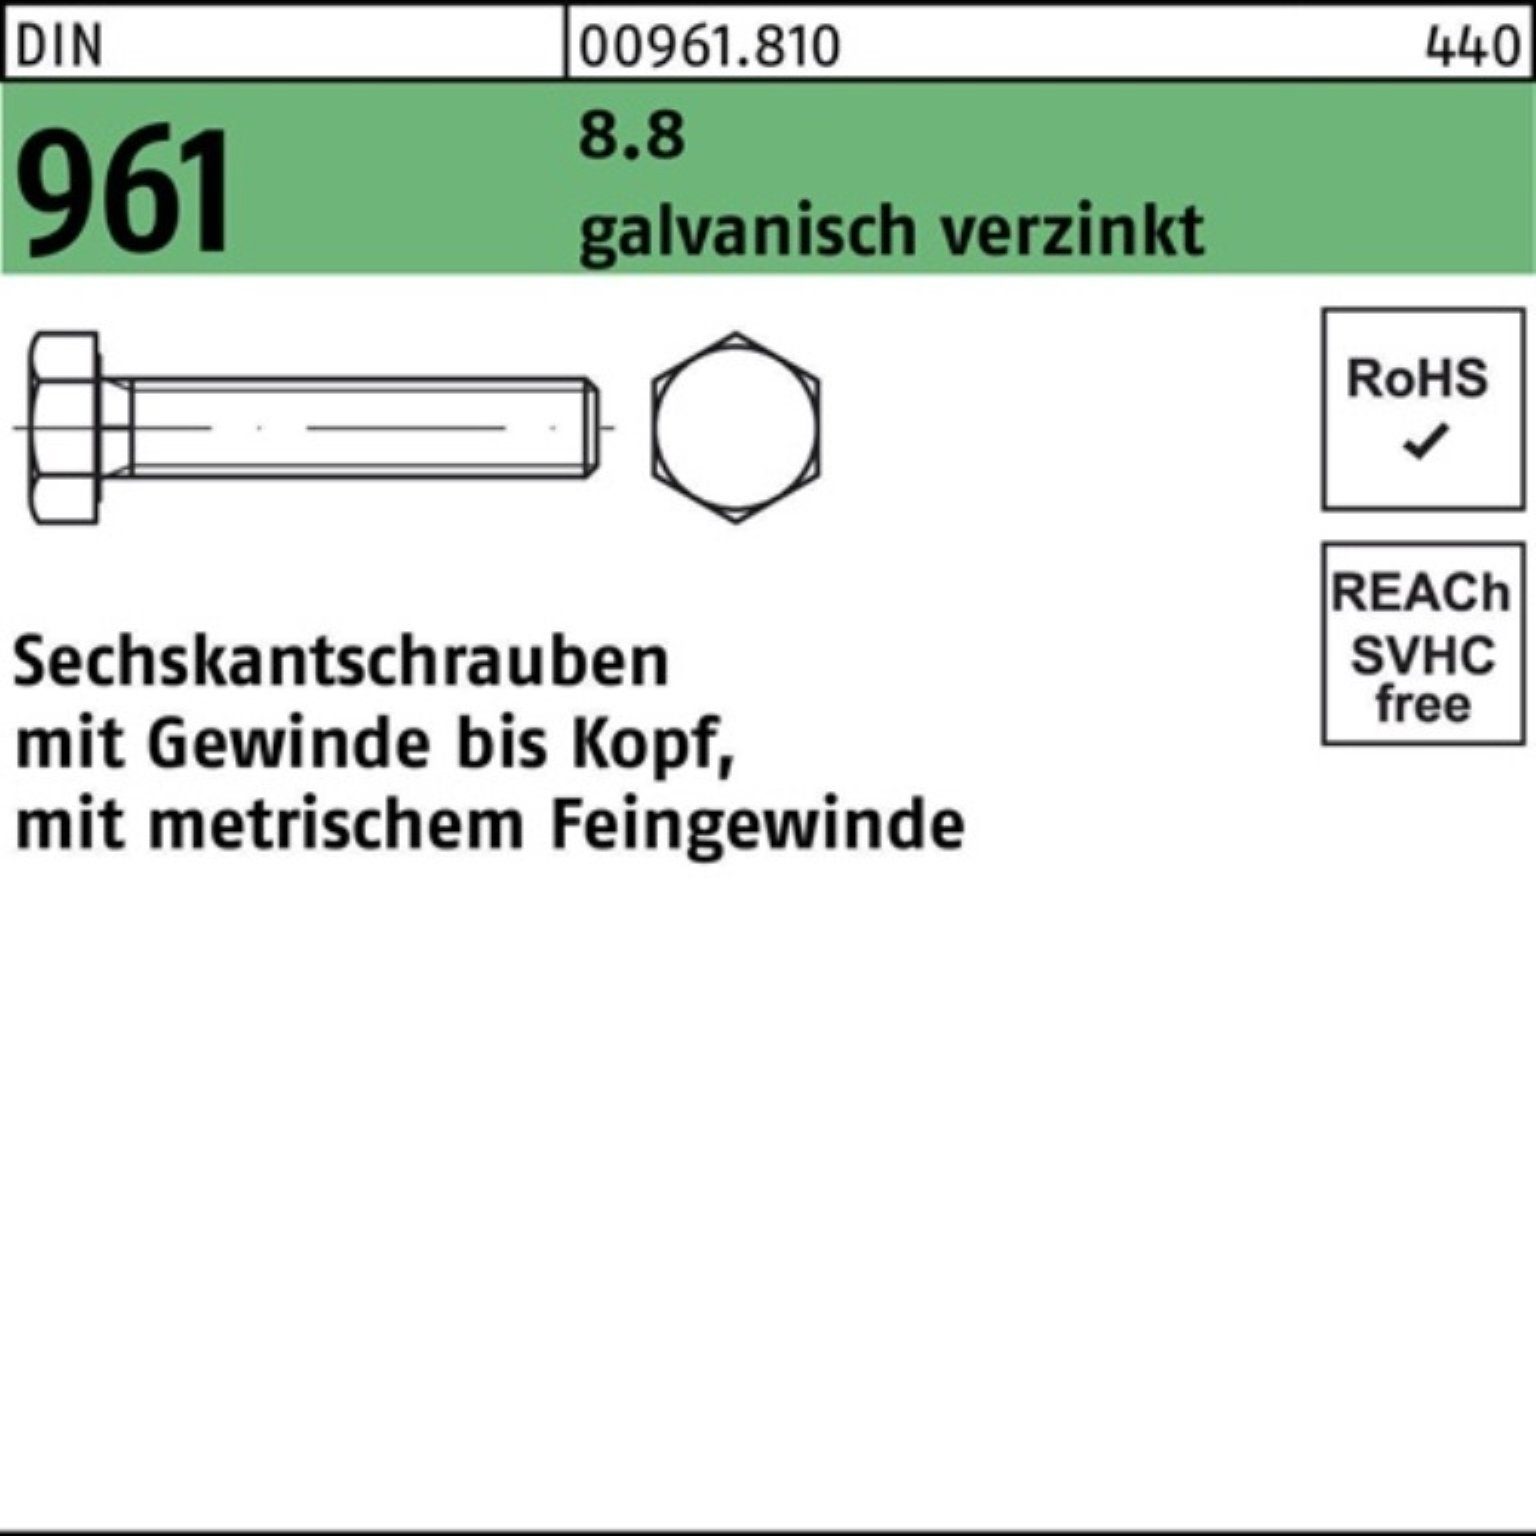 Pack 100er Reyher Sechskantschraube 961 M20x1,5x Sechskantschraube galv.verz. DIN VG 25 70 8.8